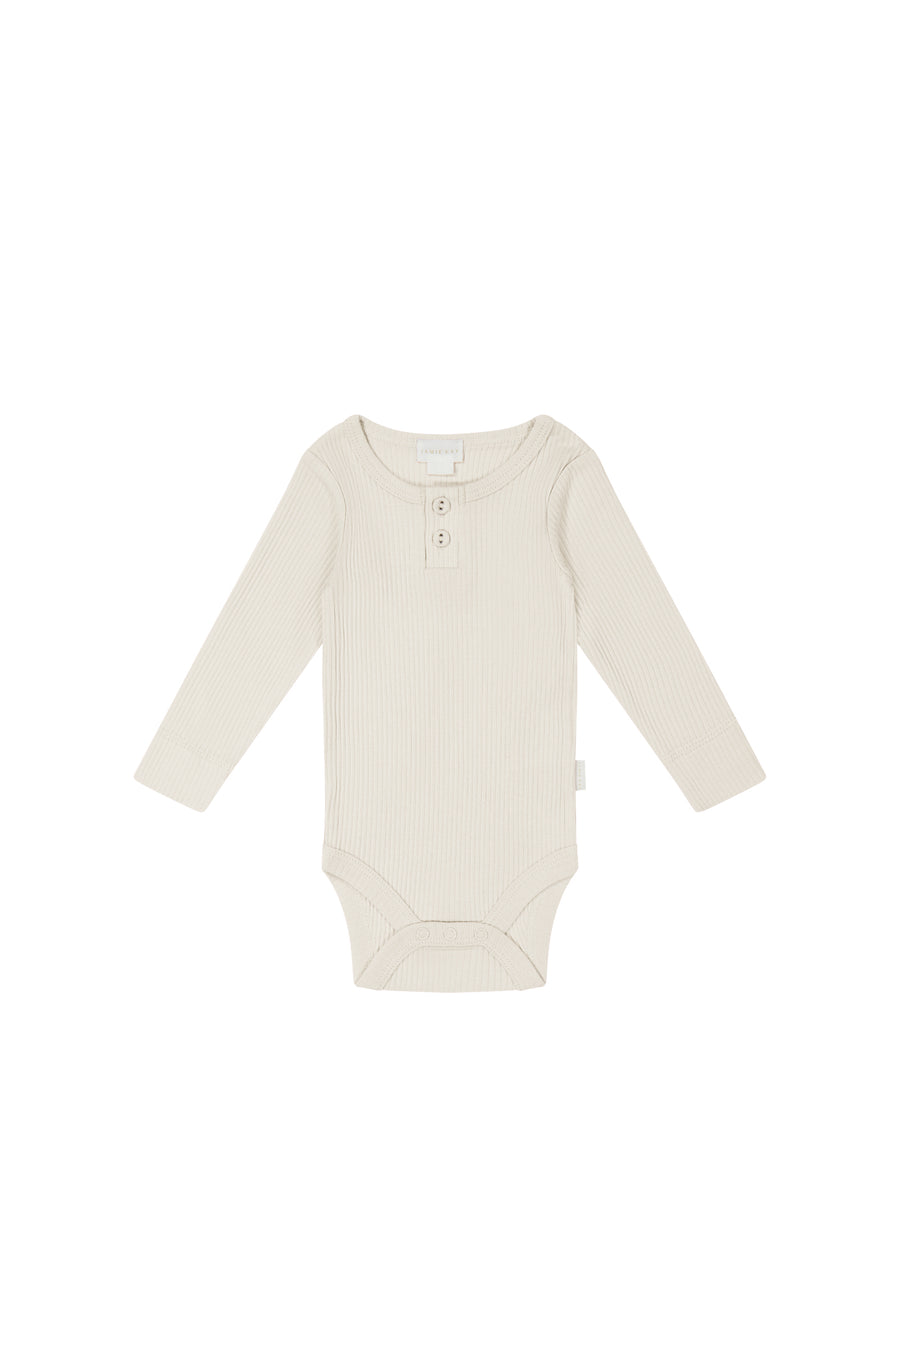 Organic Cotton Modal Long Sleeve Bodysuit  - Milk Childrens Bodysuit from Jamie Kay USA